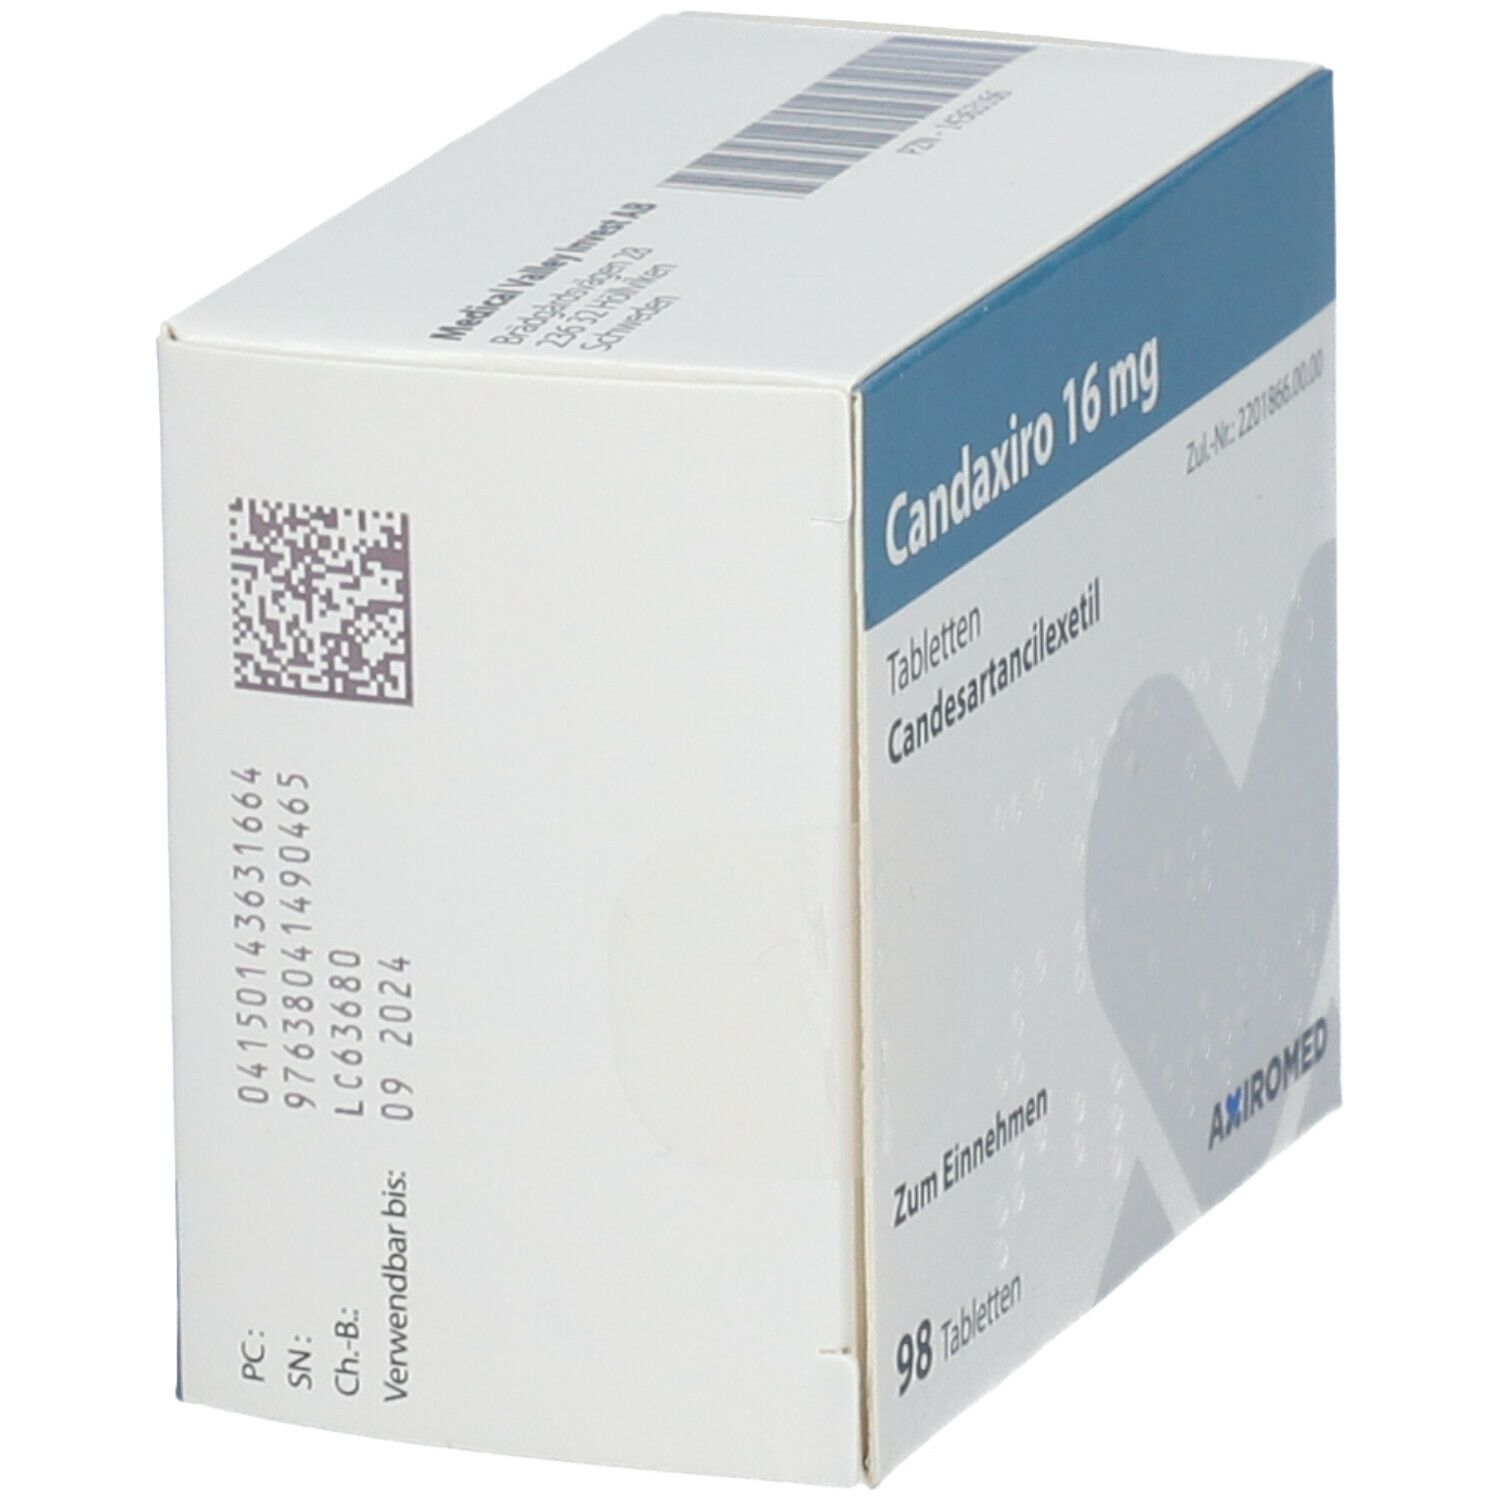 Candaxiro 16 mg